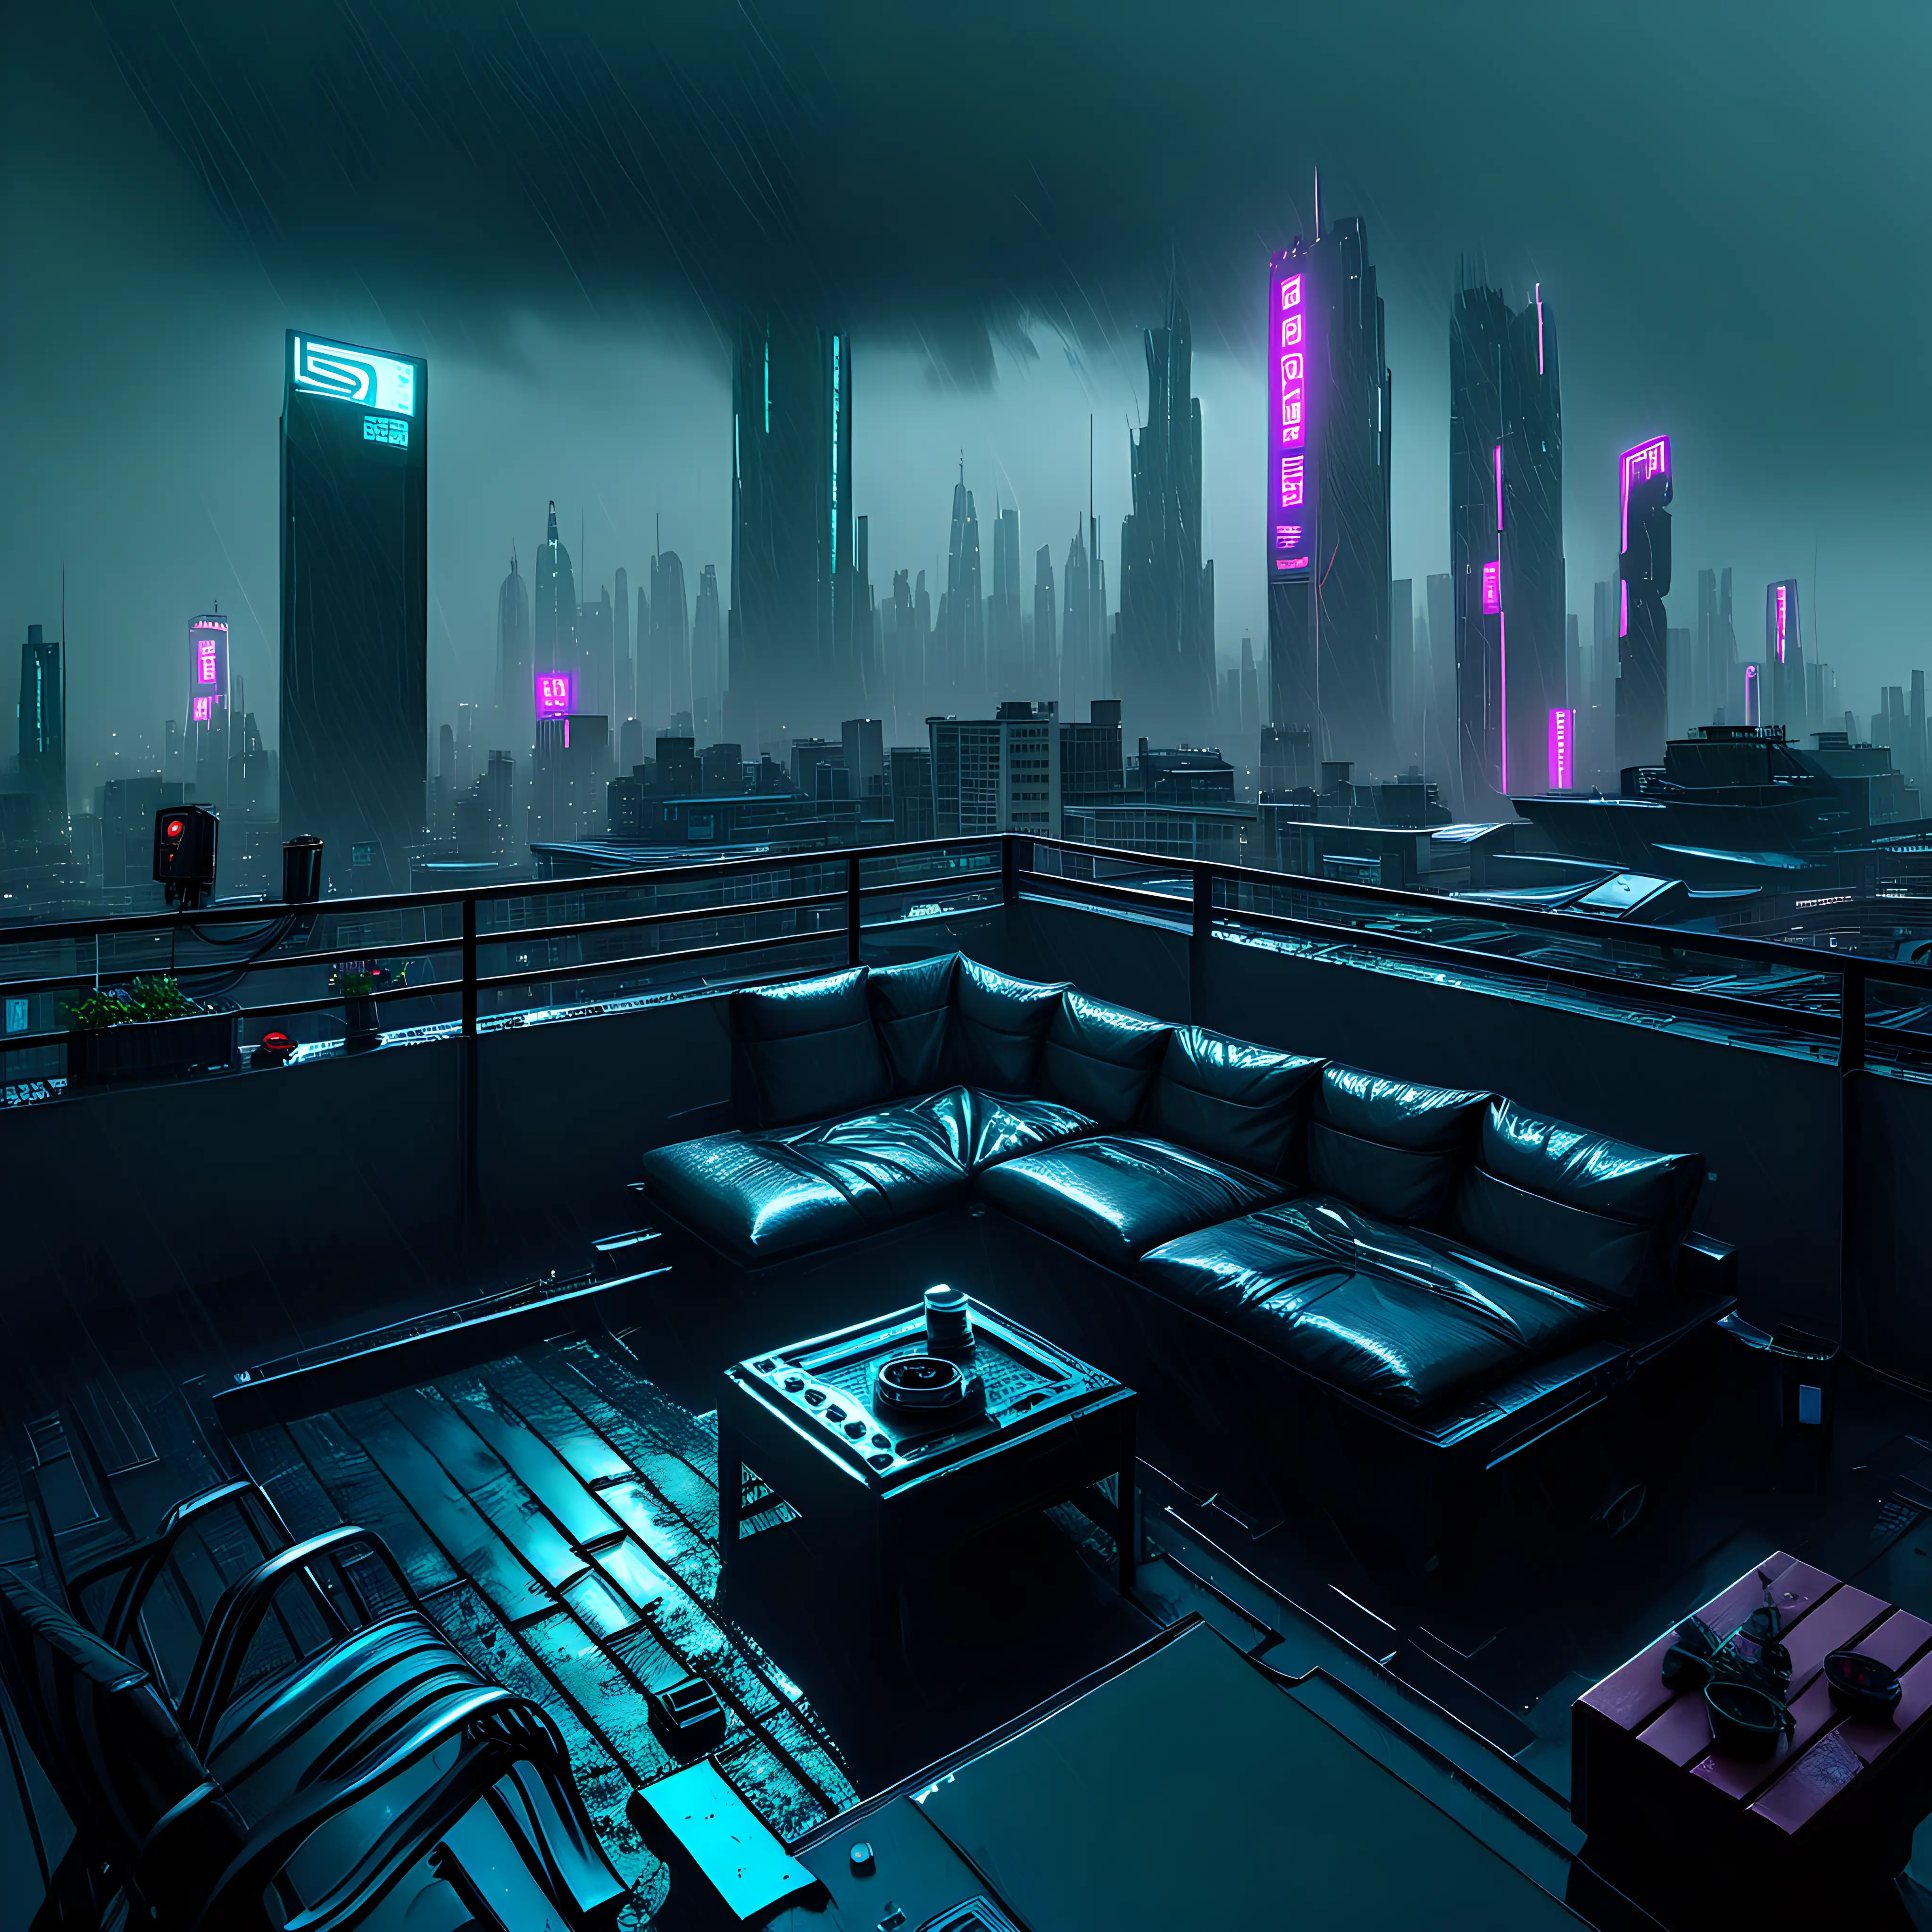 Futuristic Cyberpunk Rooftop Scene with Rain